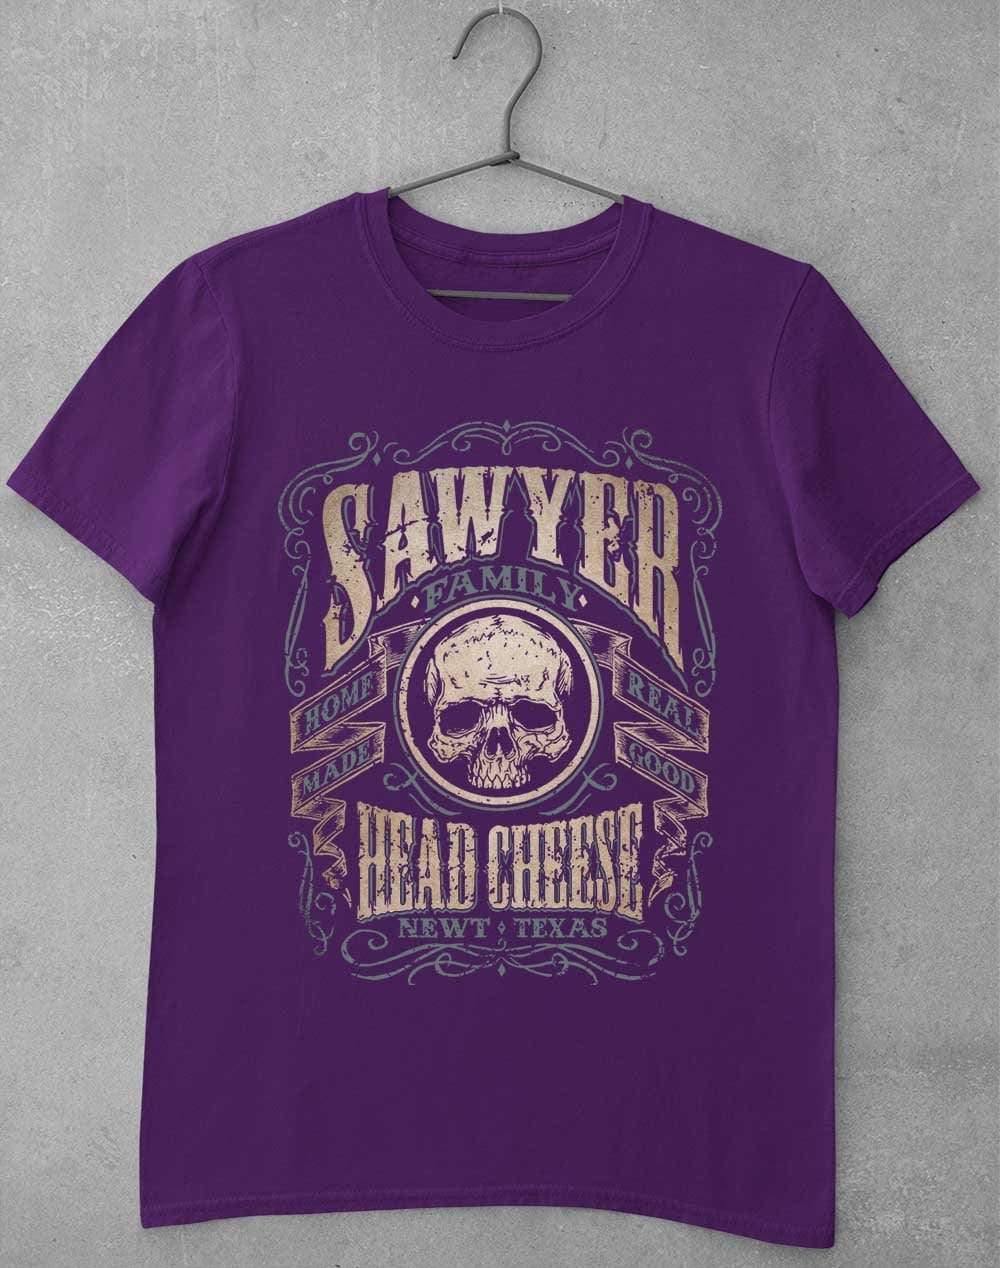 Sawyer Family Head Cheese T-Shirt S / Purple  - Off World Tees